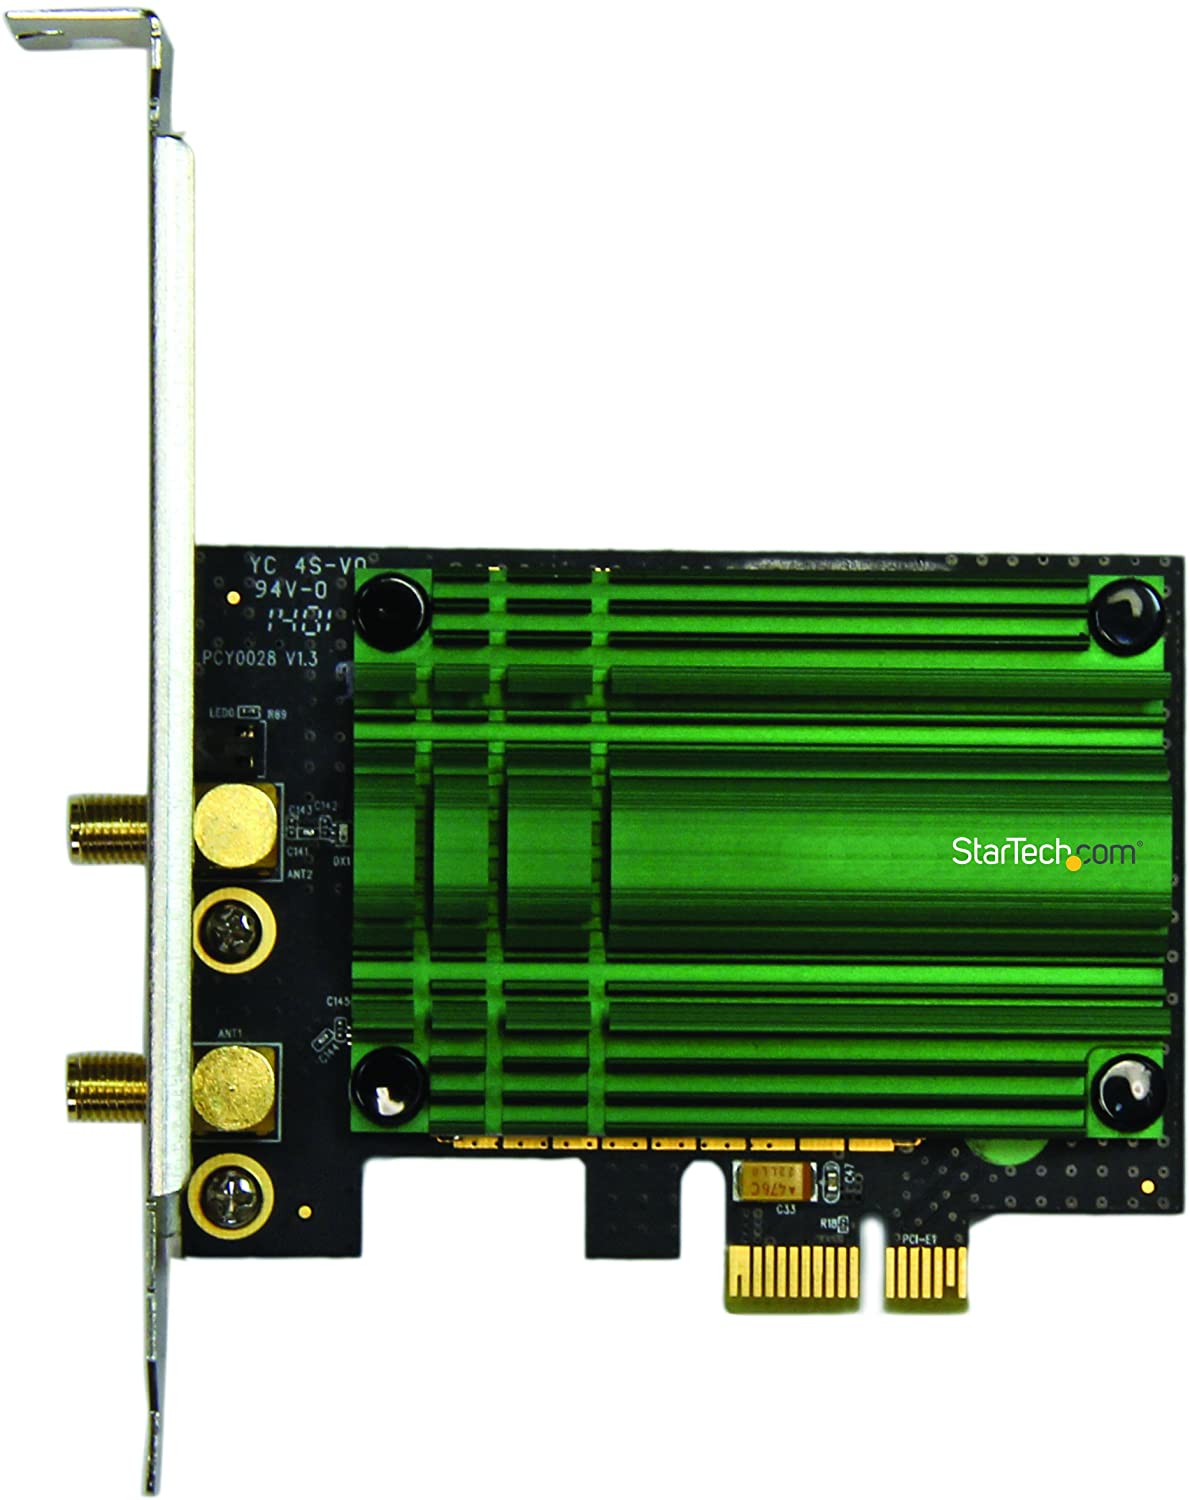 StarTech.com PCI Express AC1200 Dual Band Wireless-AC Network Adapter - PCIe 802.11ac WiFi Card - 2.4 / 5GHz Wireless-AC Card (PEX867WAC22)